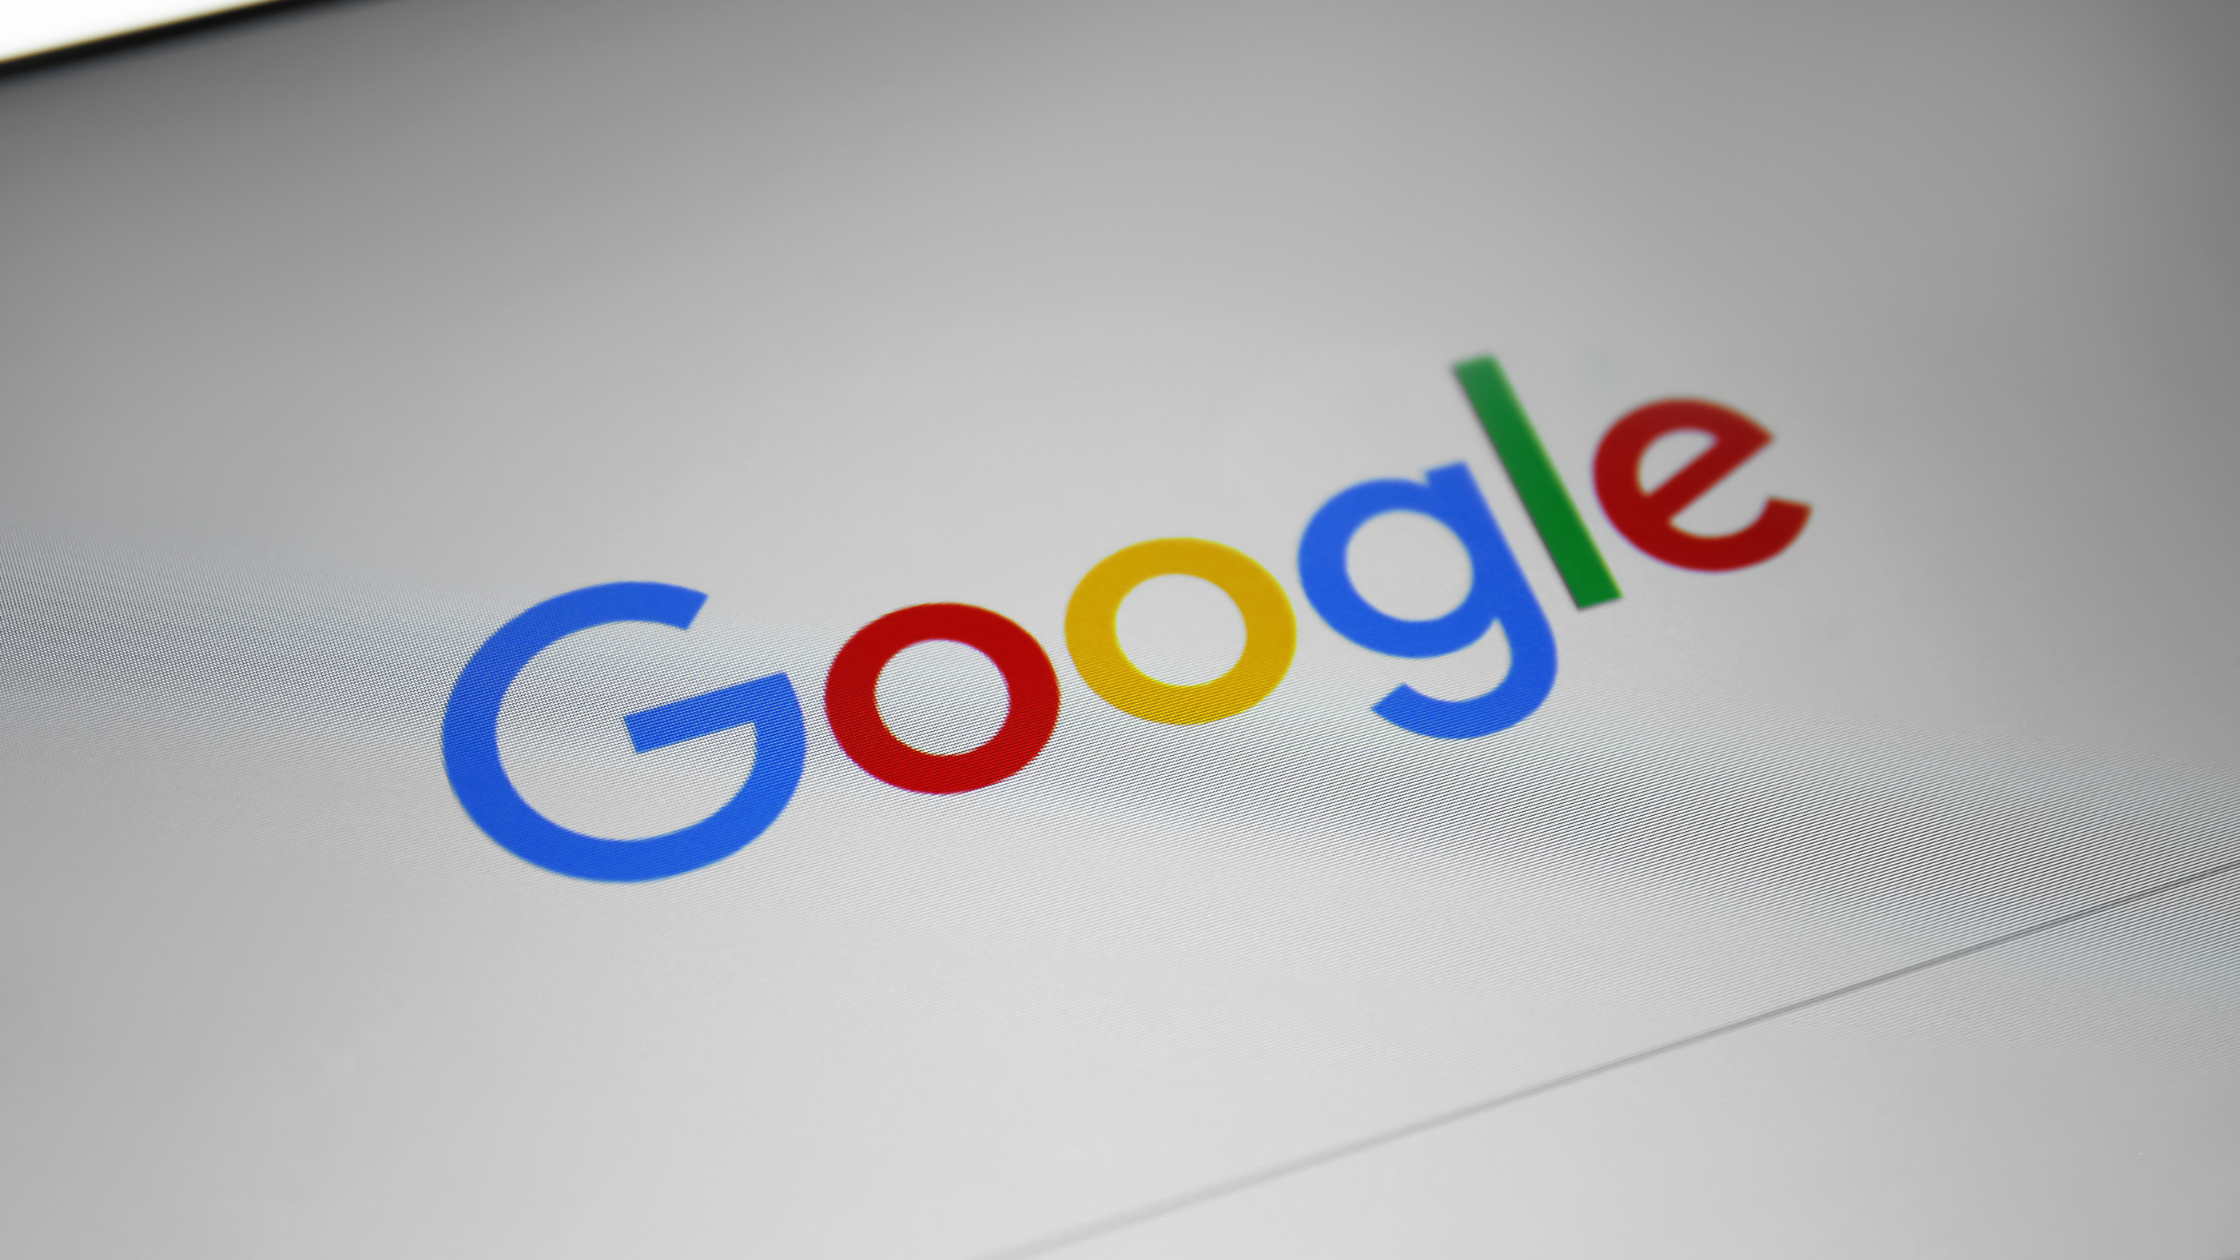 Google Logo and search bar